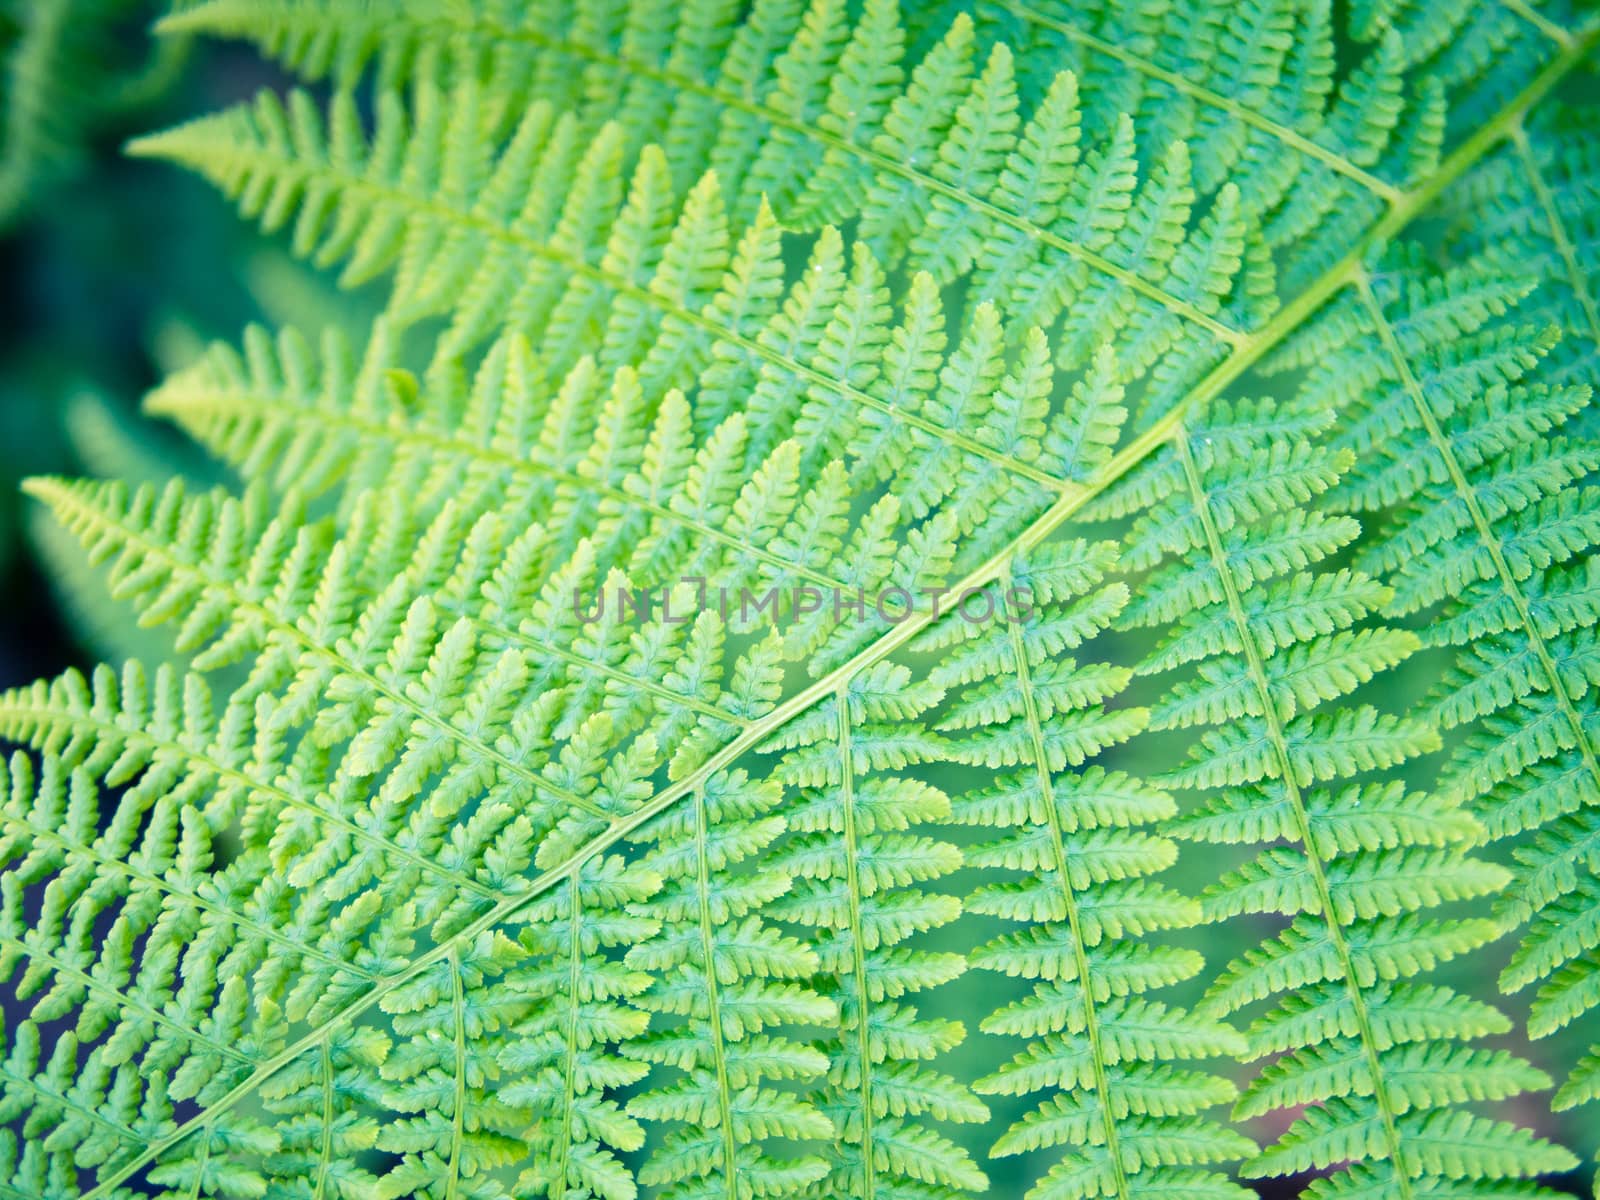 Detail of fern leaf, bracken sword, fresh saturated green symmetry pattern, nature representation